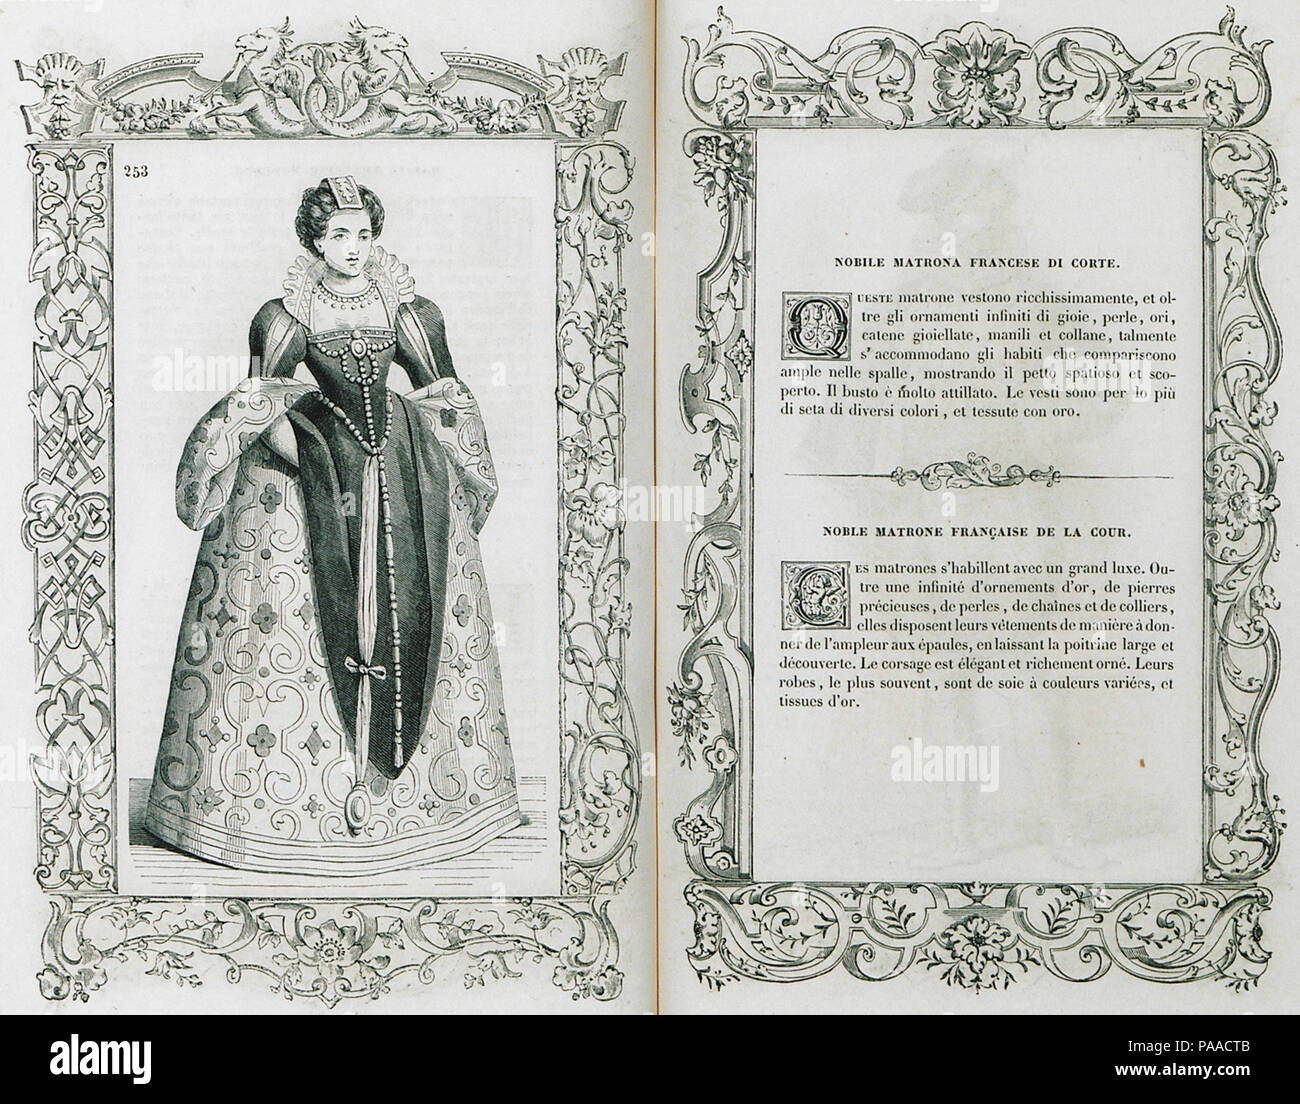 185 Nobile matrona francese di Corte - Cesare Vecellio - 1860 Banque D'Images